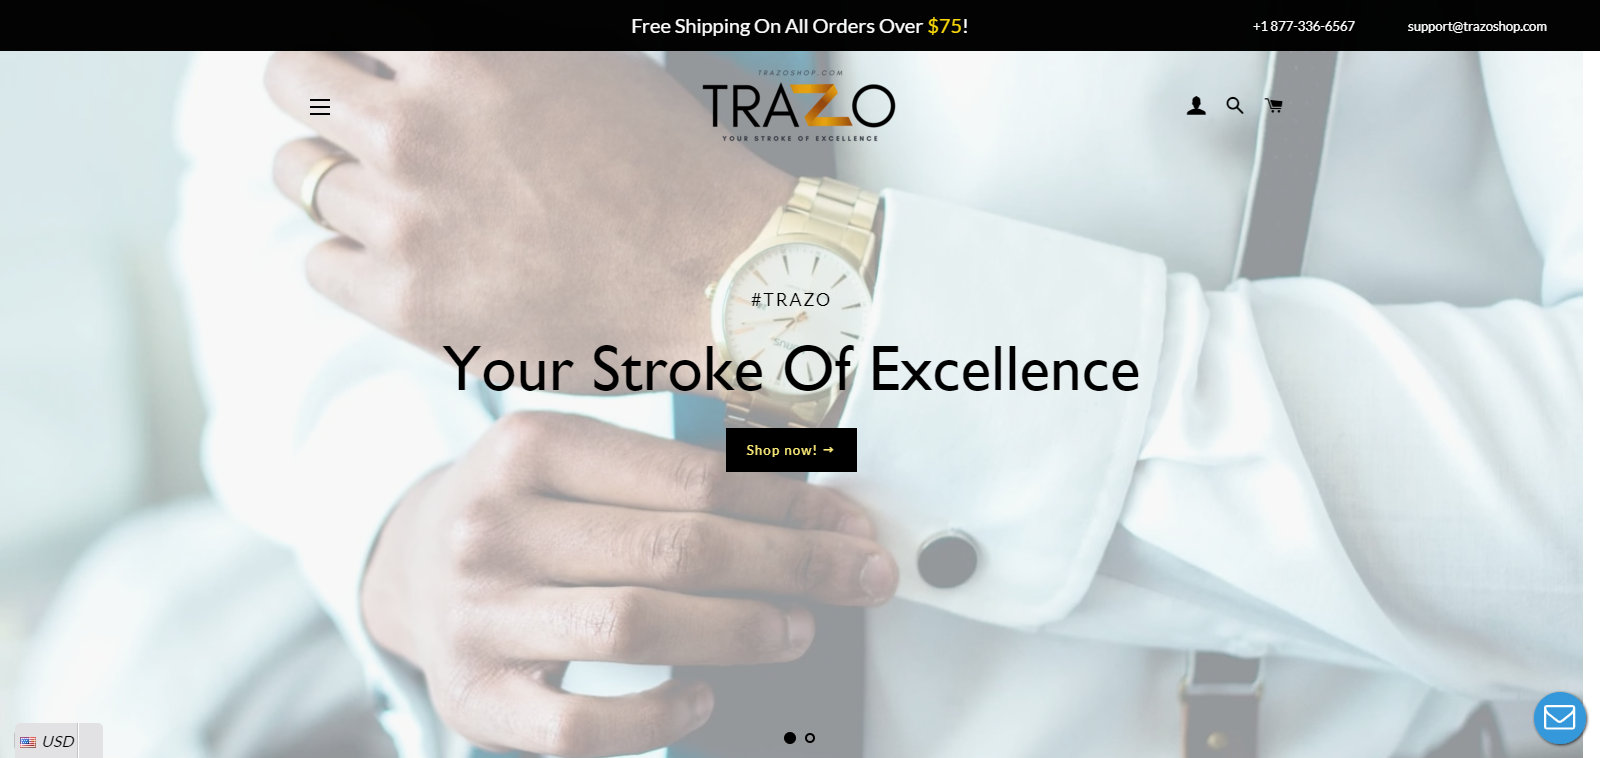 Trazo Online store image